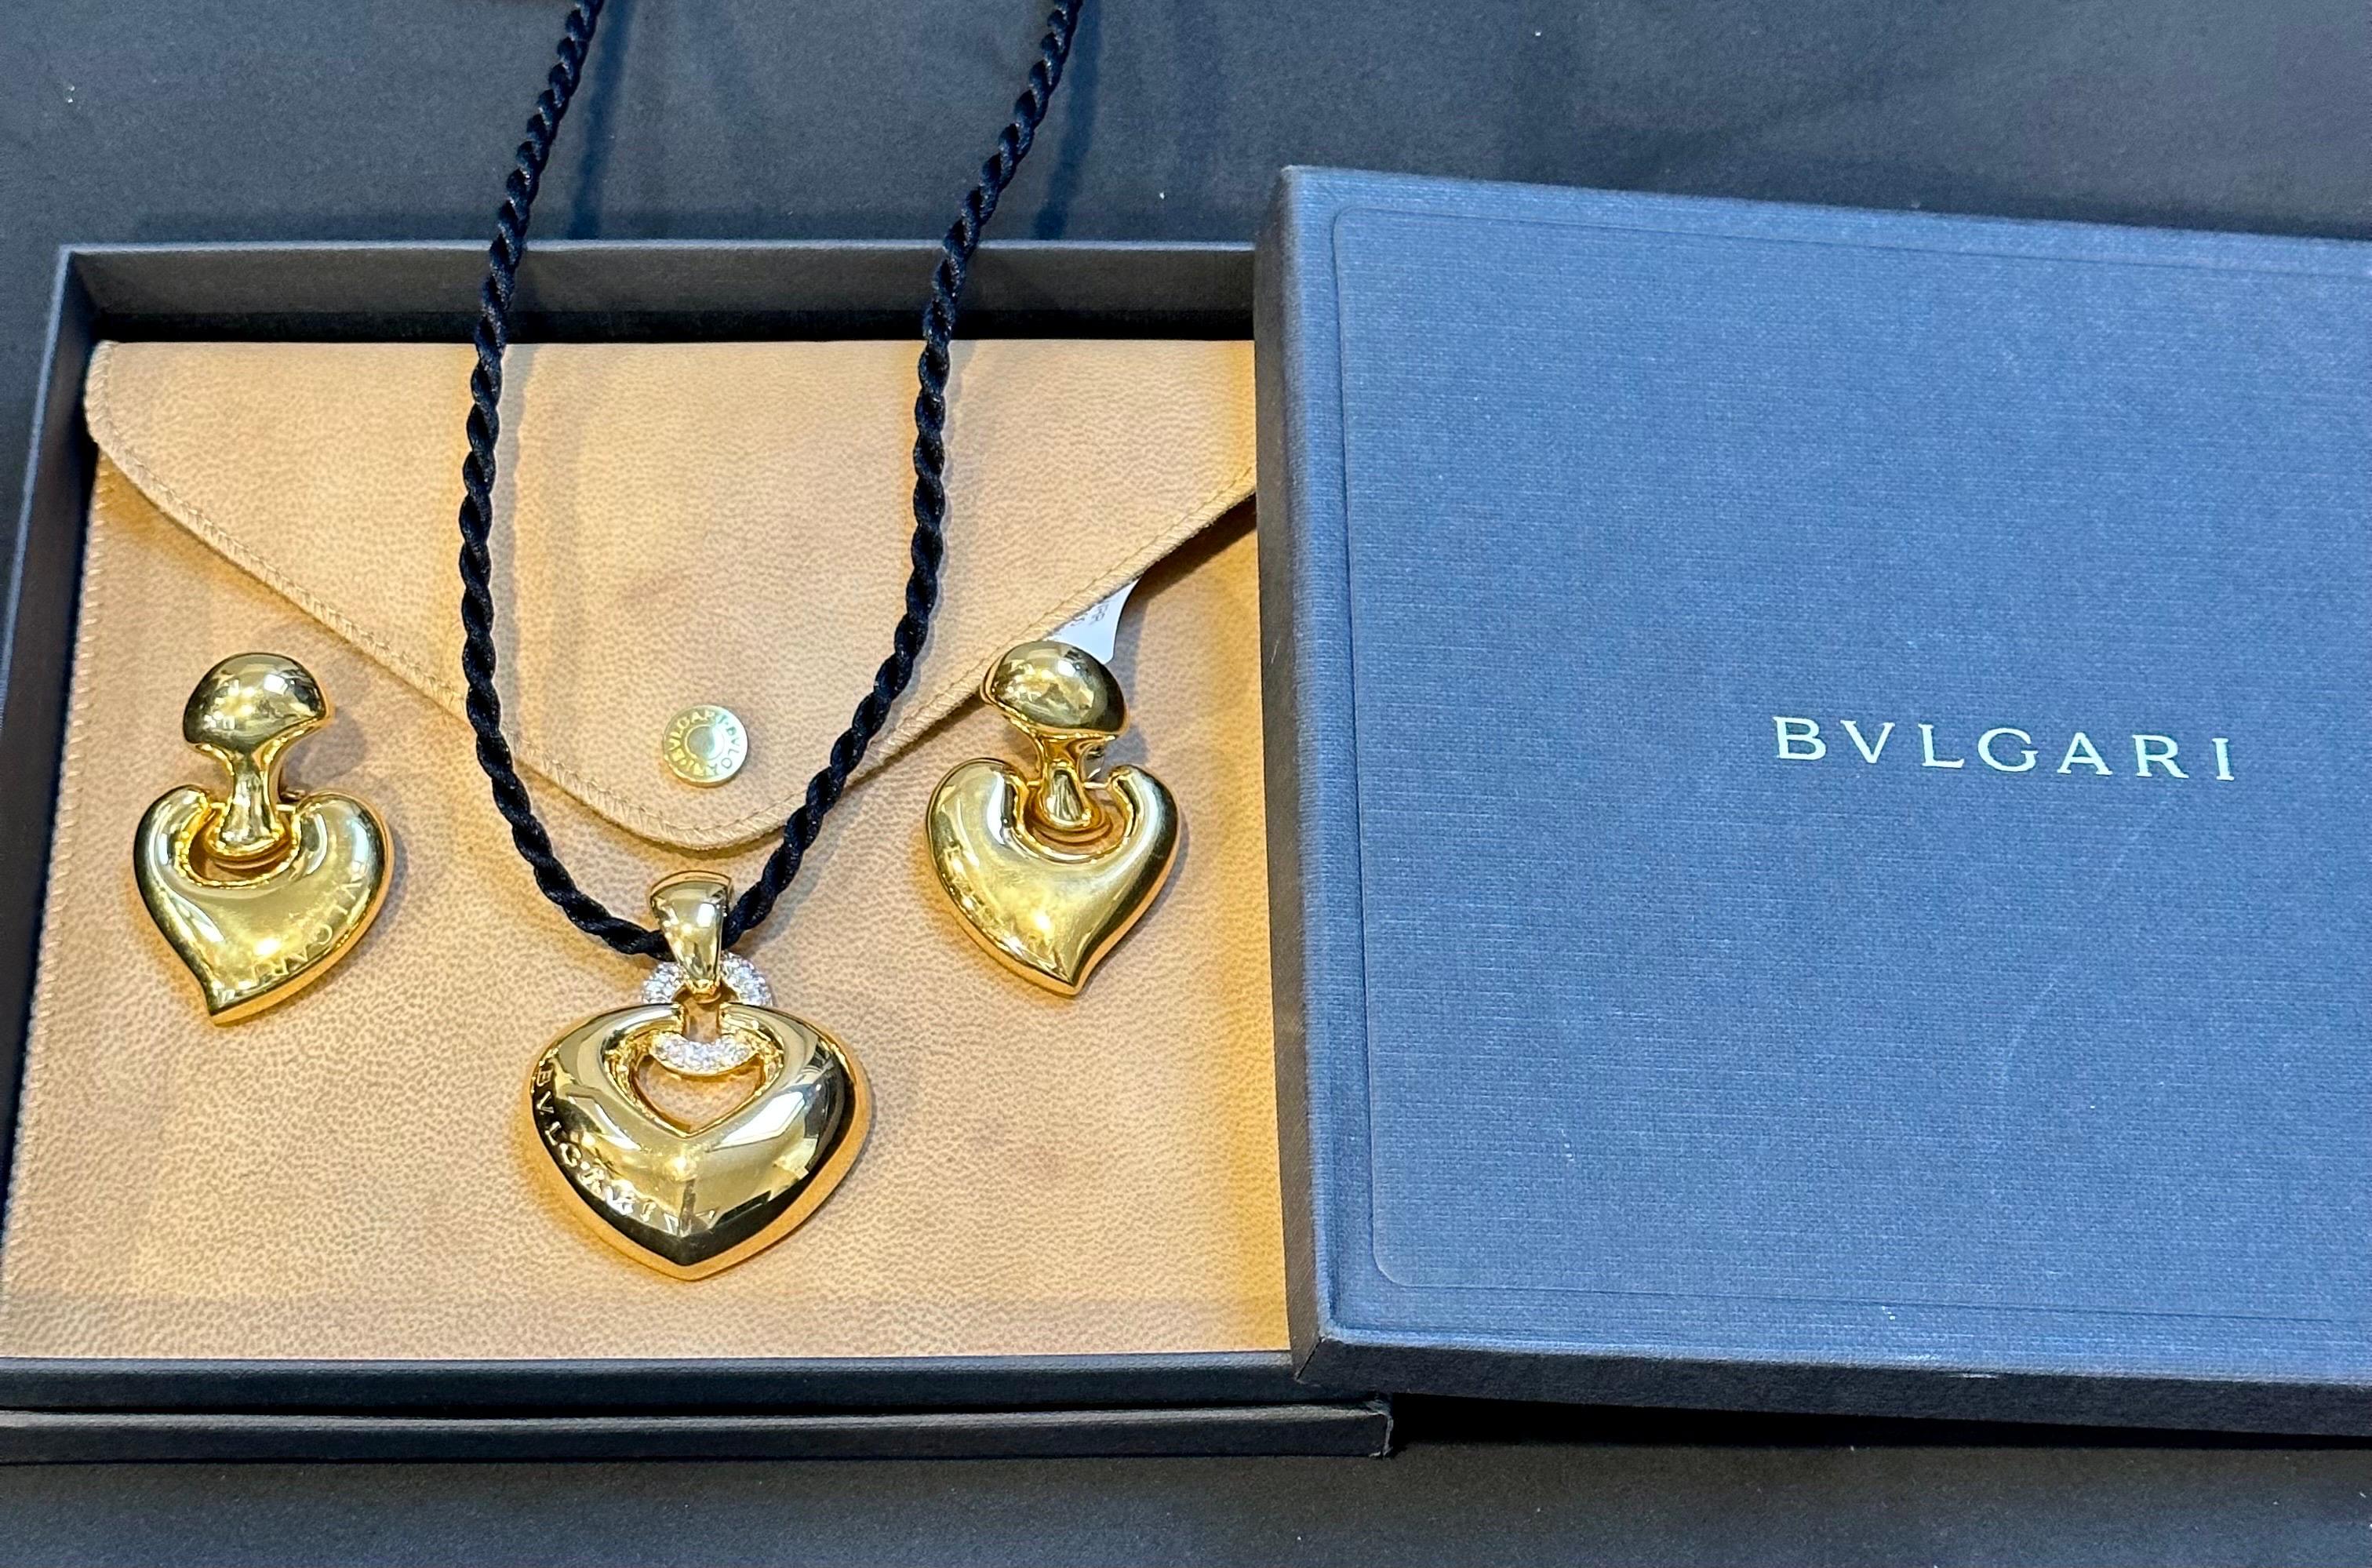 Bulgari 'Doppio Cuore' Gold and Diamond Puffed Heart Pendant on the Leather Cord 11